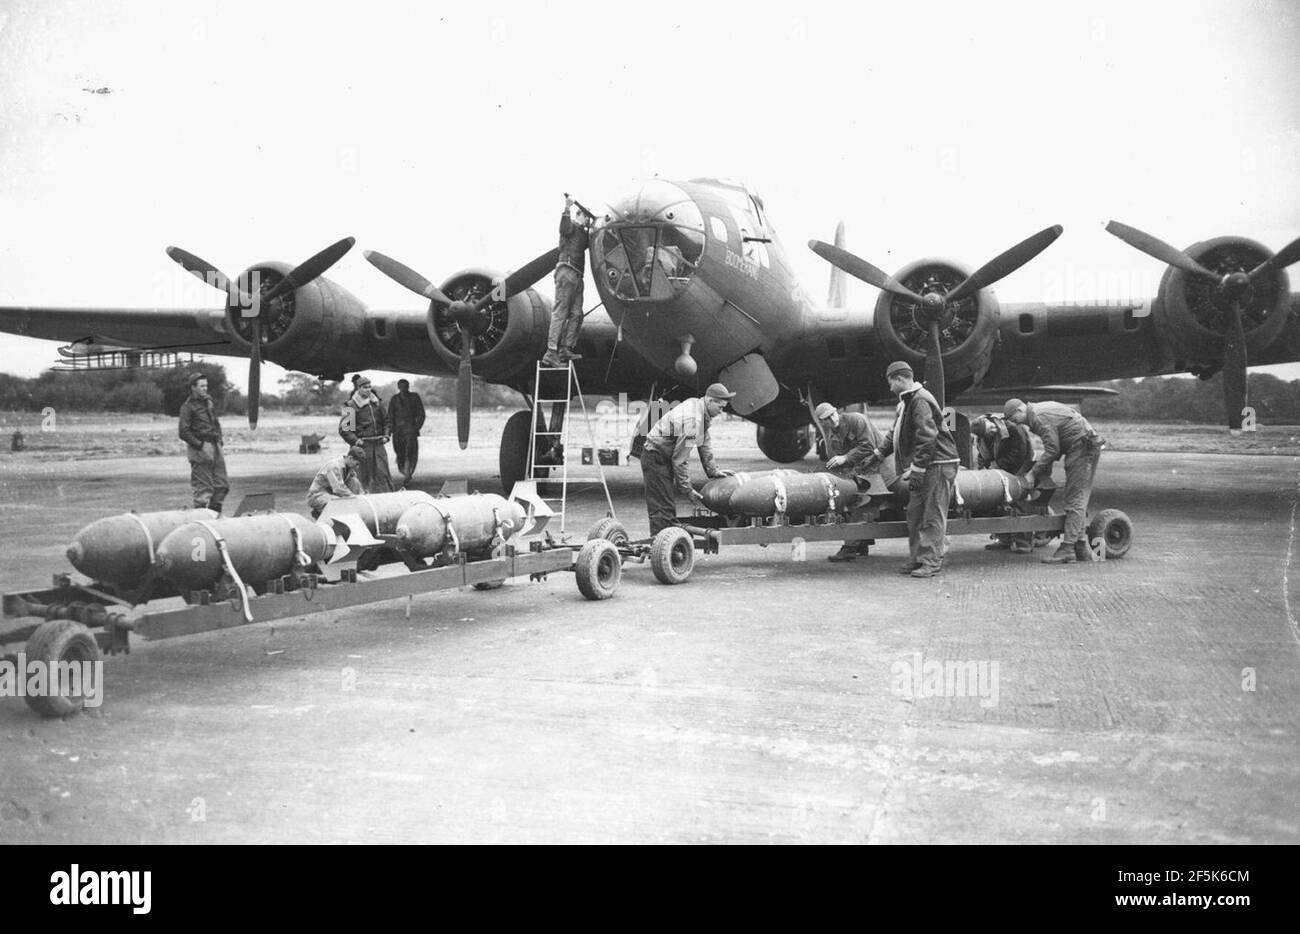 RAF Bovingdon - B-17 bomb loading Stock Photo - Alamy